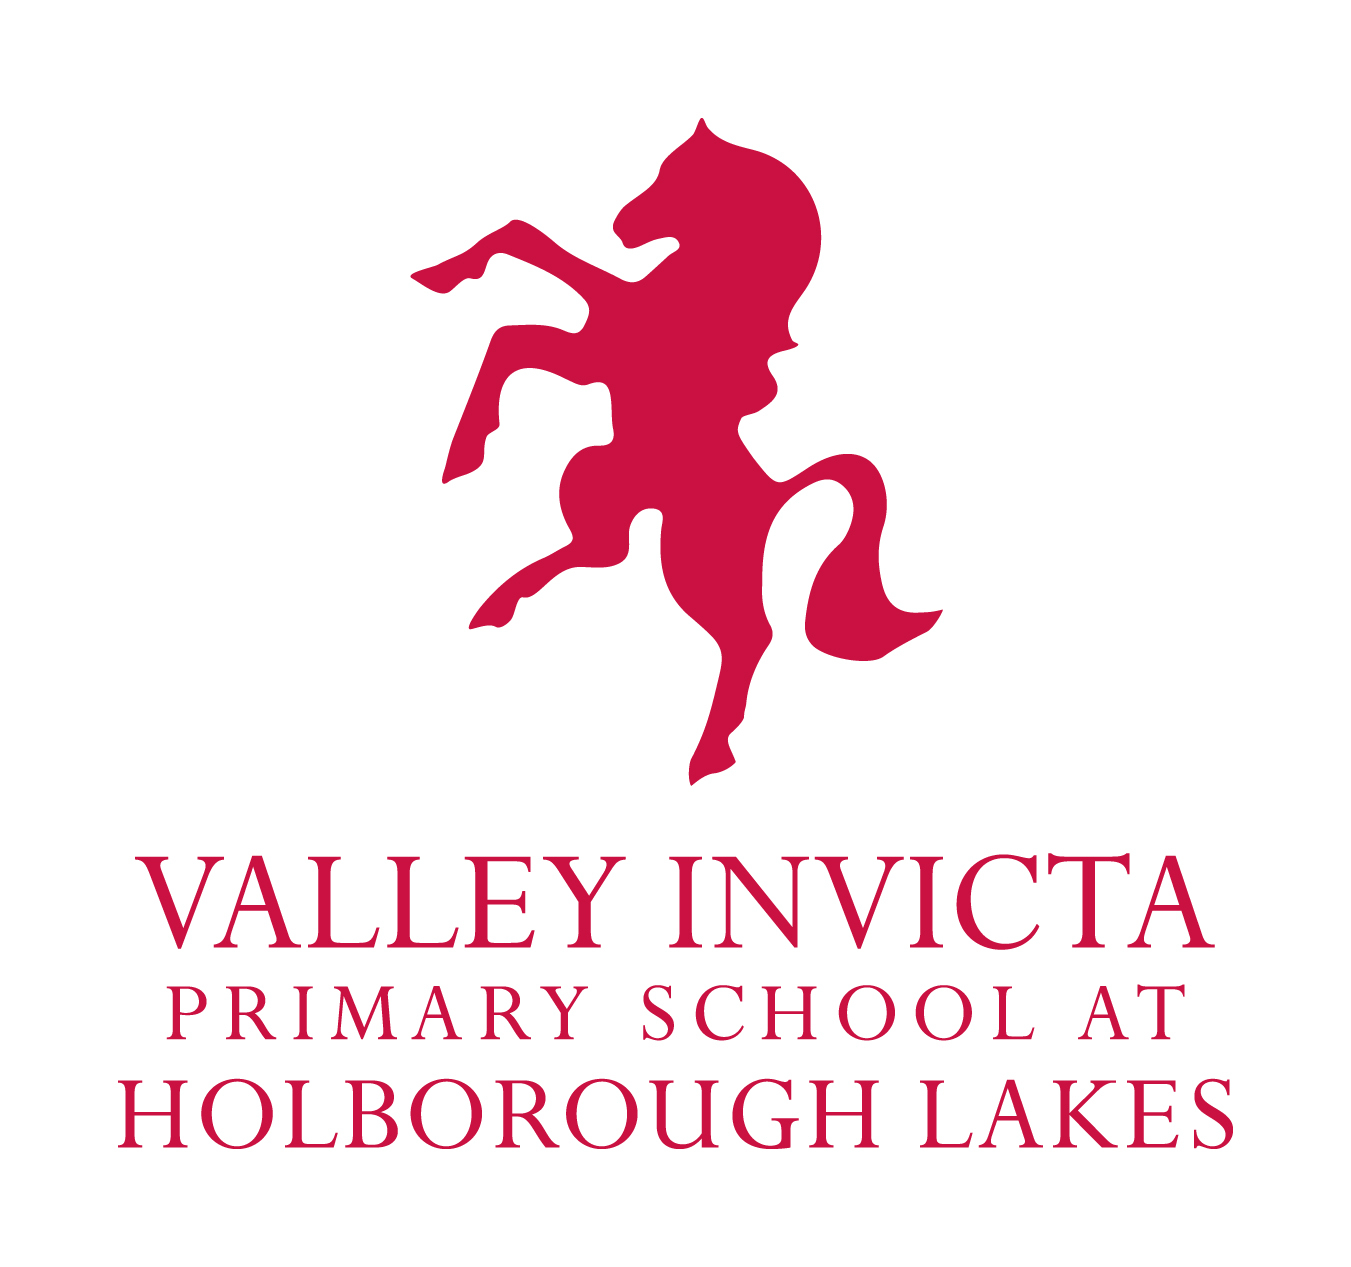 Holborough Lakes的Valley Invicta小学